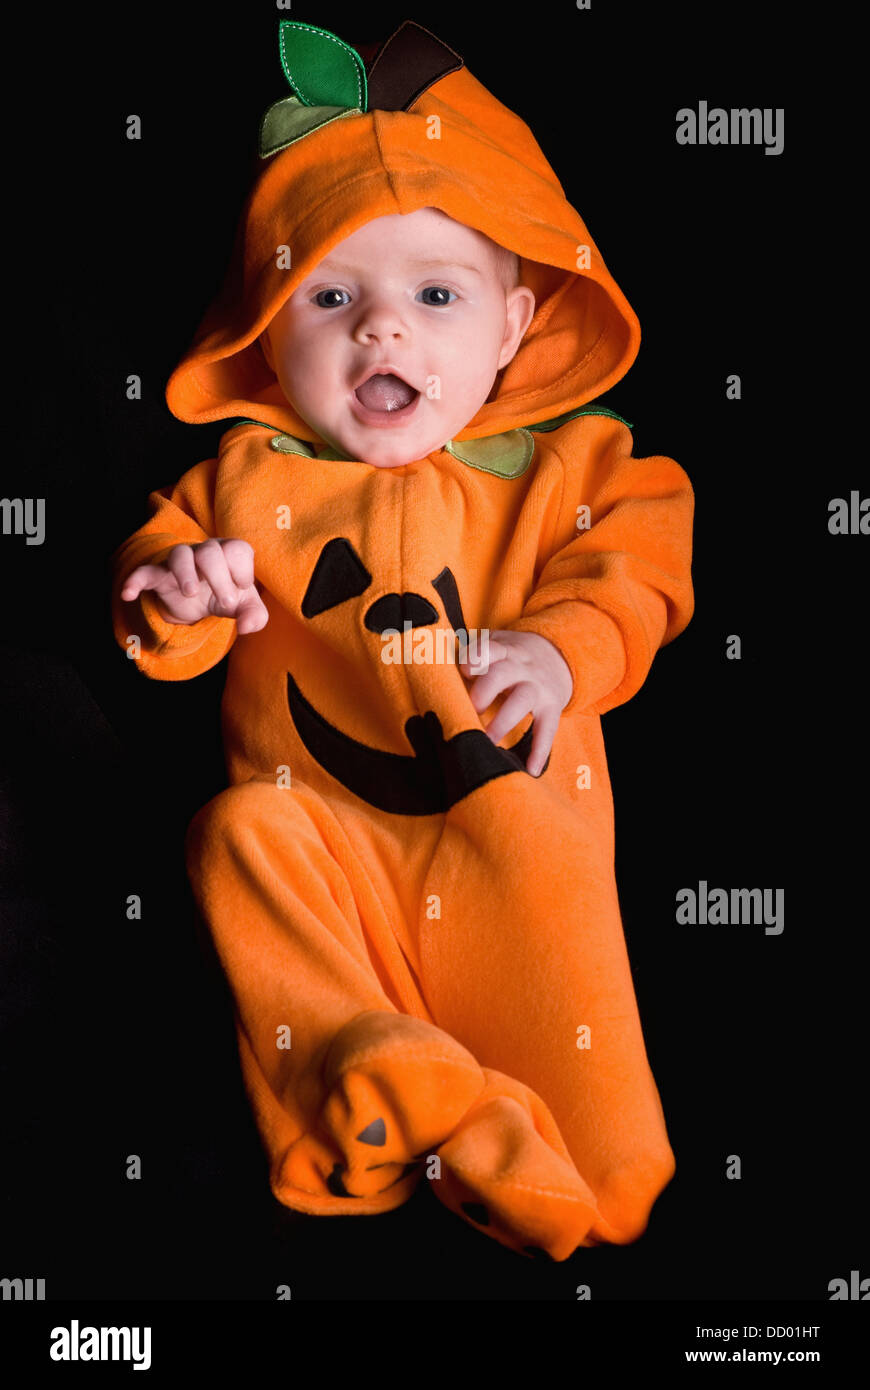 A Baby Wearing An Orange Pumpkin Costume; Alberta, Canada Stock Photo